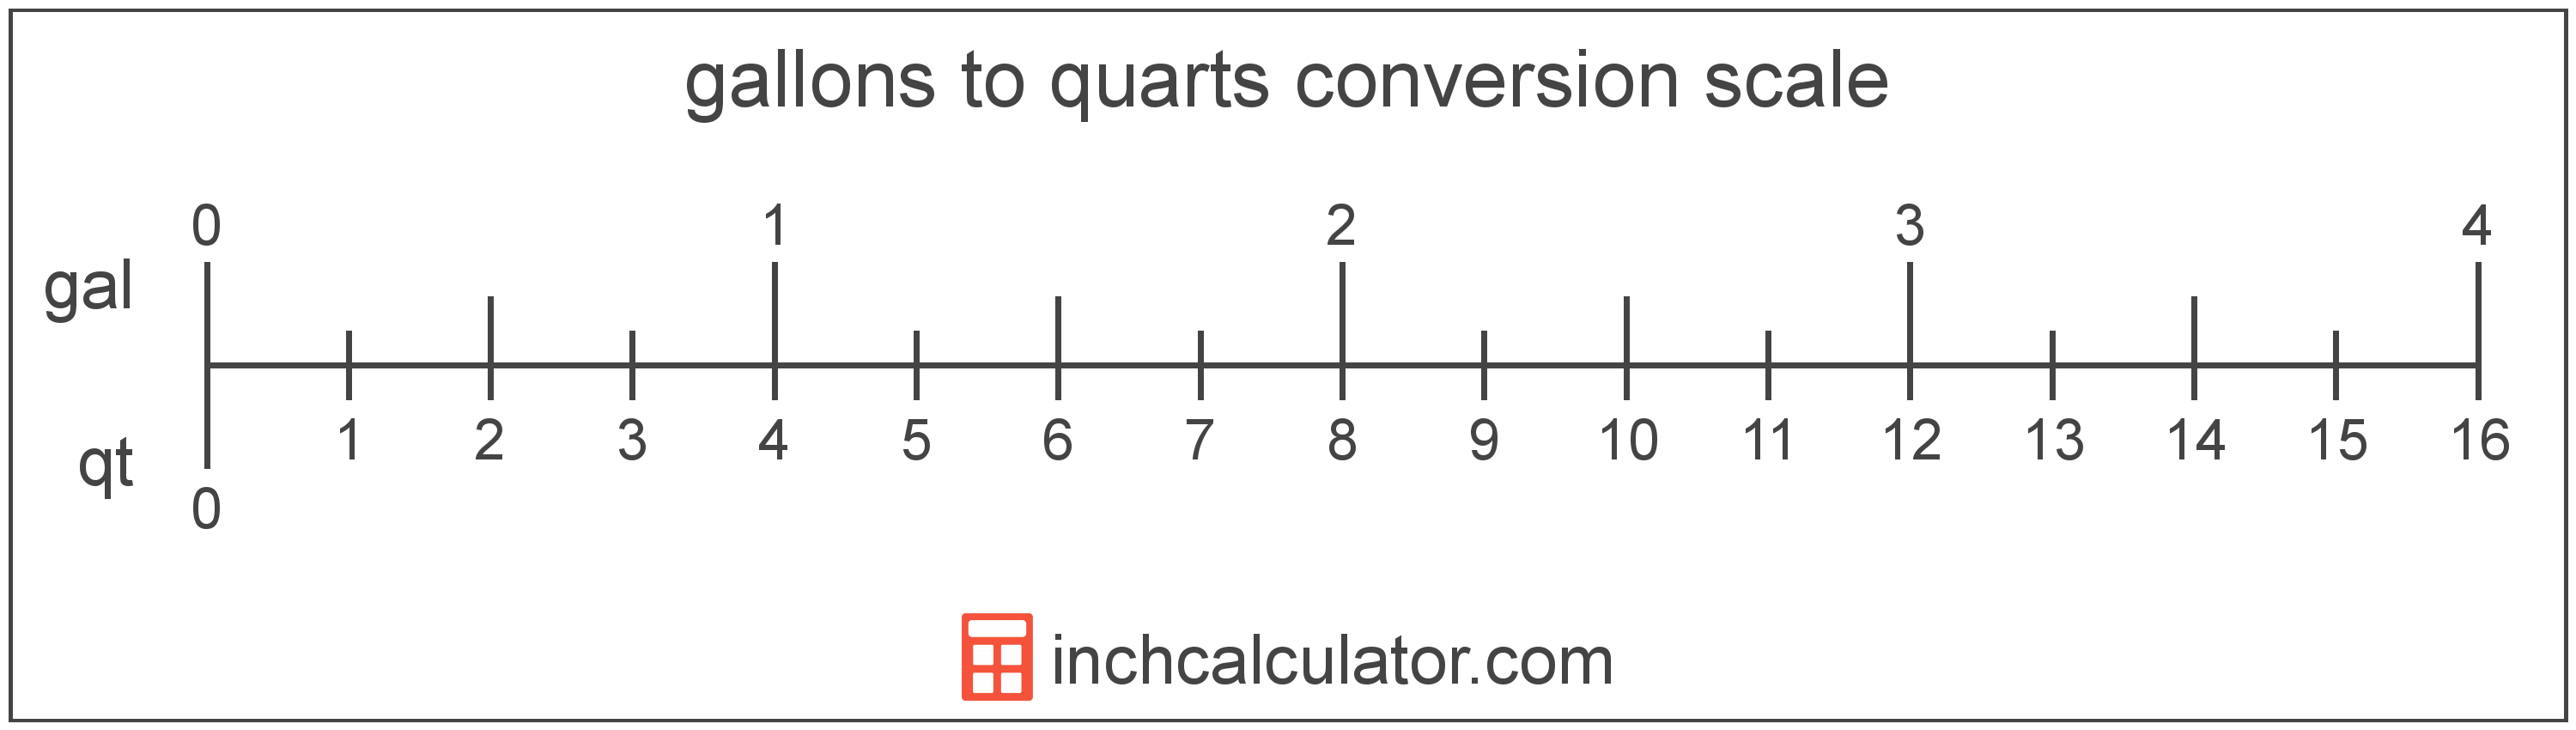 Convert Gallons To Quarts Chart